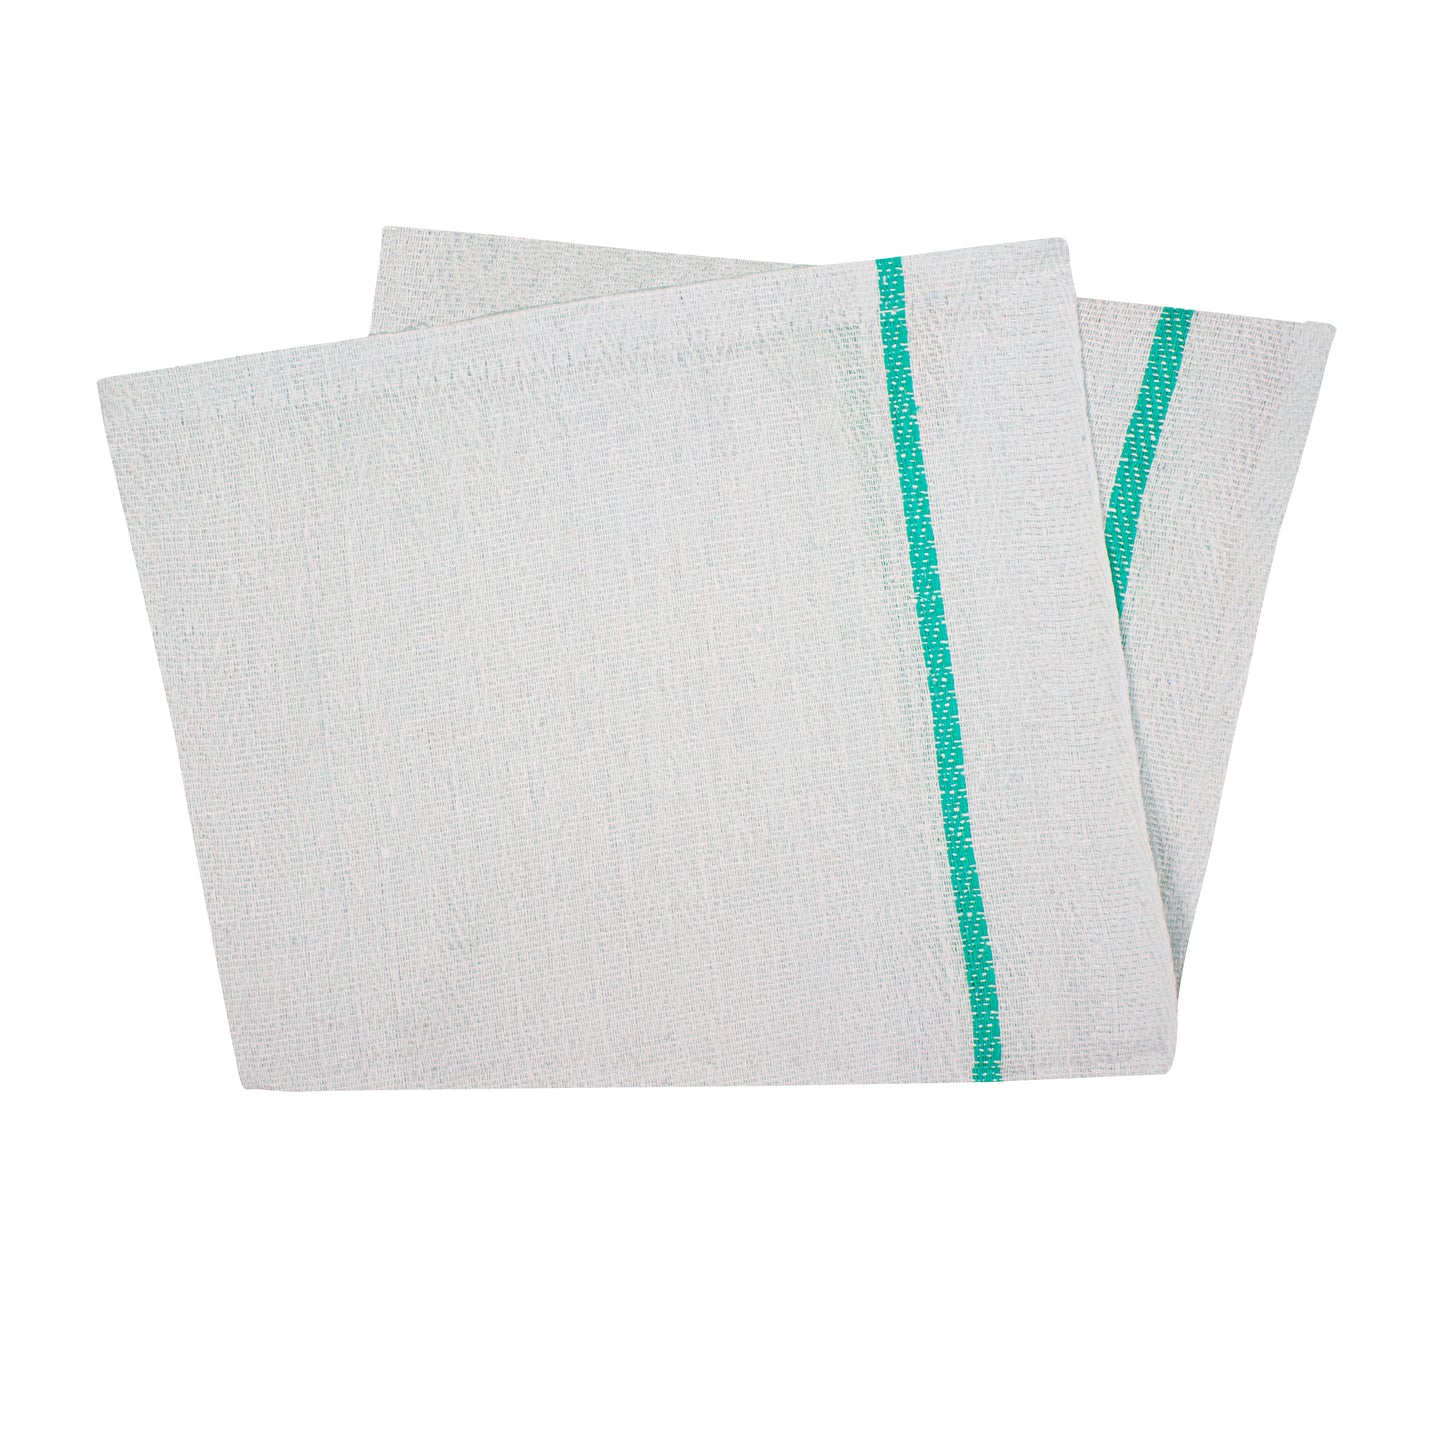 Herringbone Kitchen Towel, 30x32 inch, White with Green Center Stripe